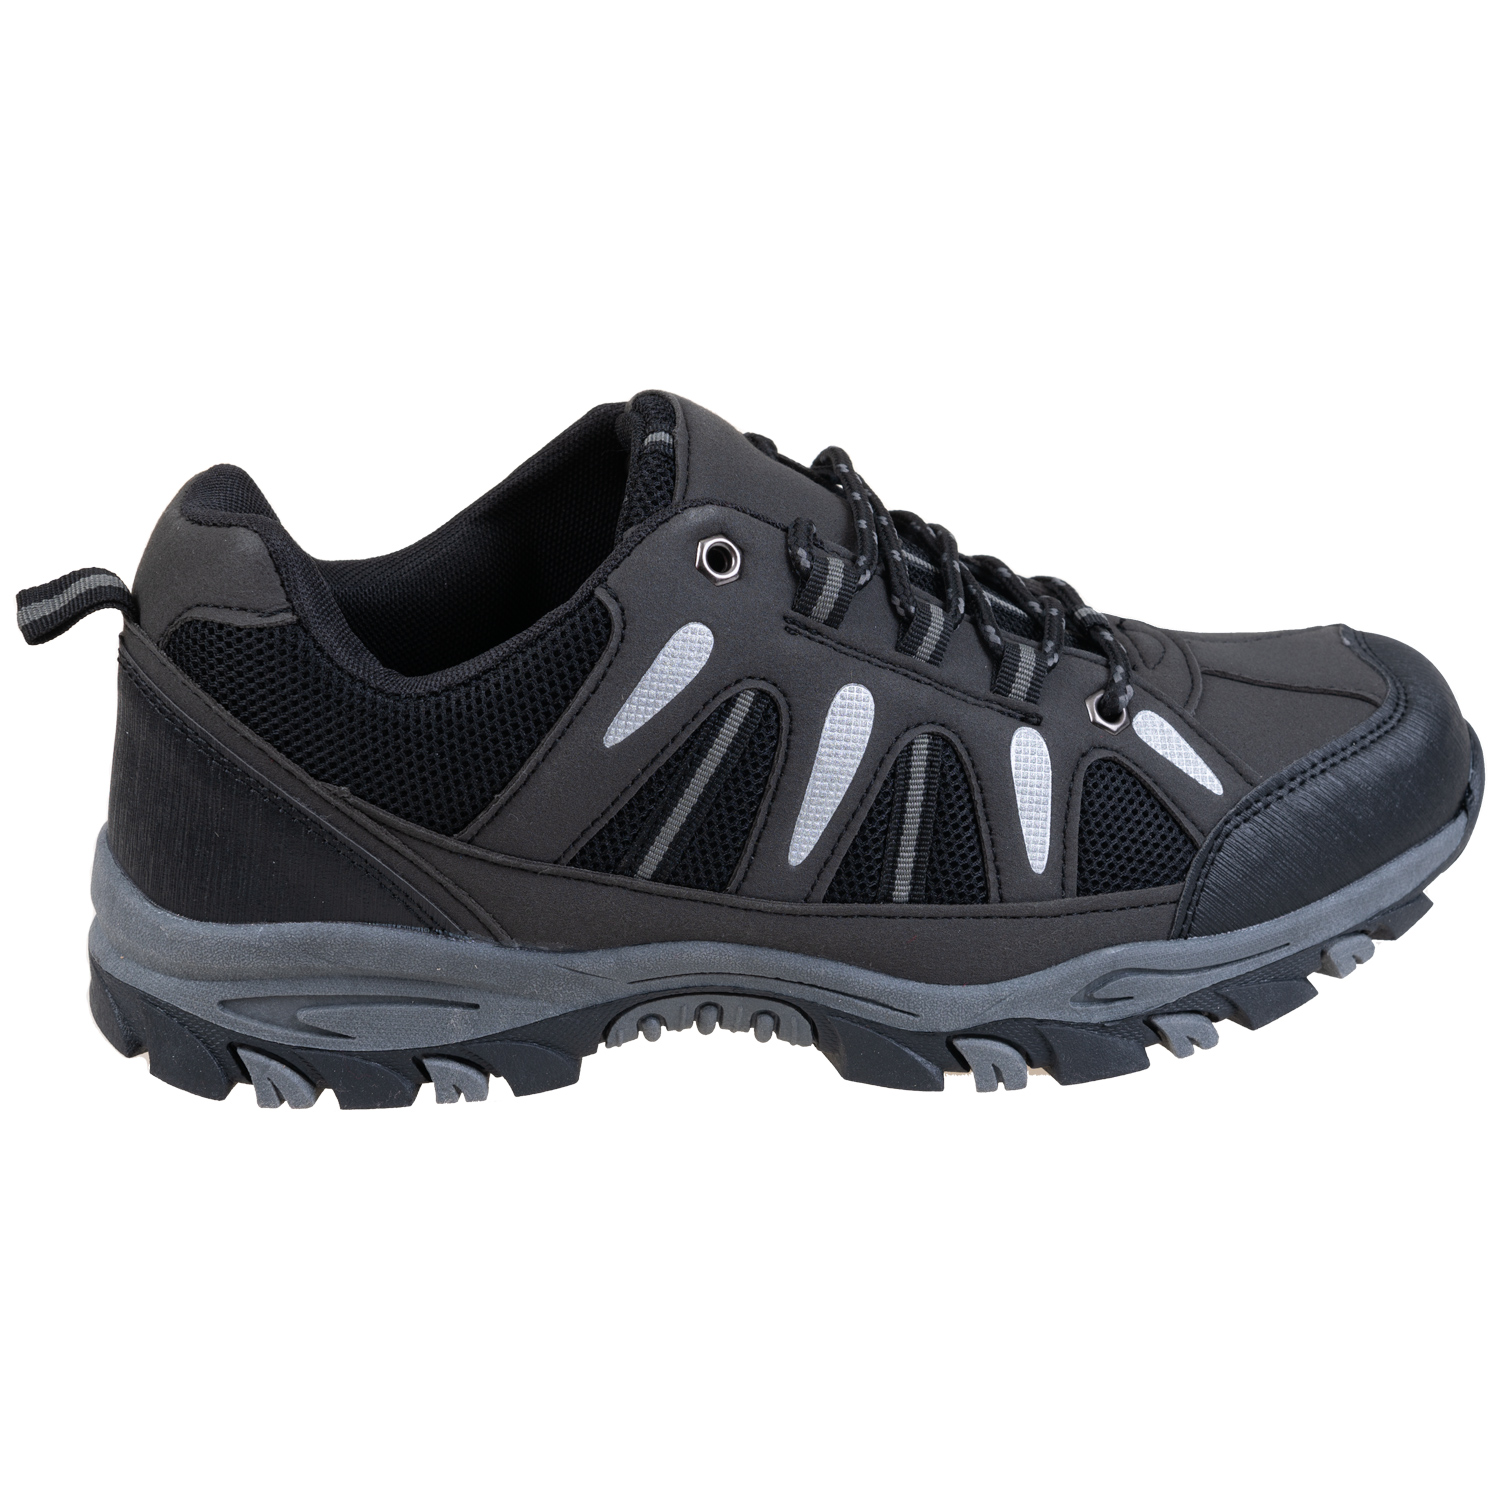 Men's Low Top Hiking Shoes. Colour: Black. Size: 7 | Rossy